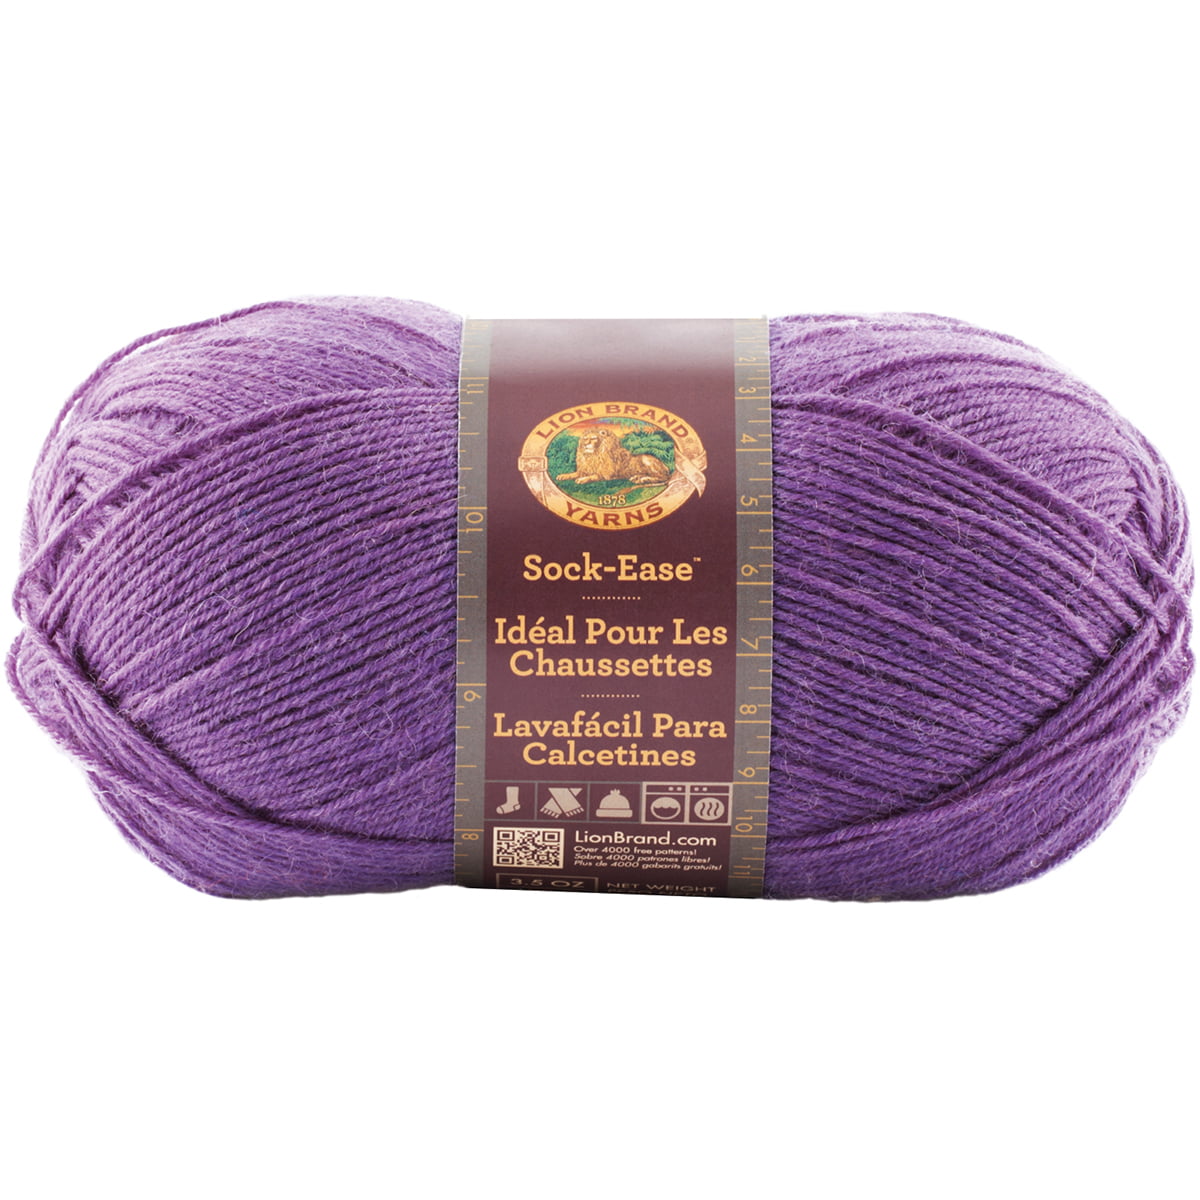 438 yds Sour Ball 1 skein Lion Brand Sock-Ease wool blend yarn 